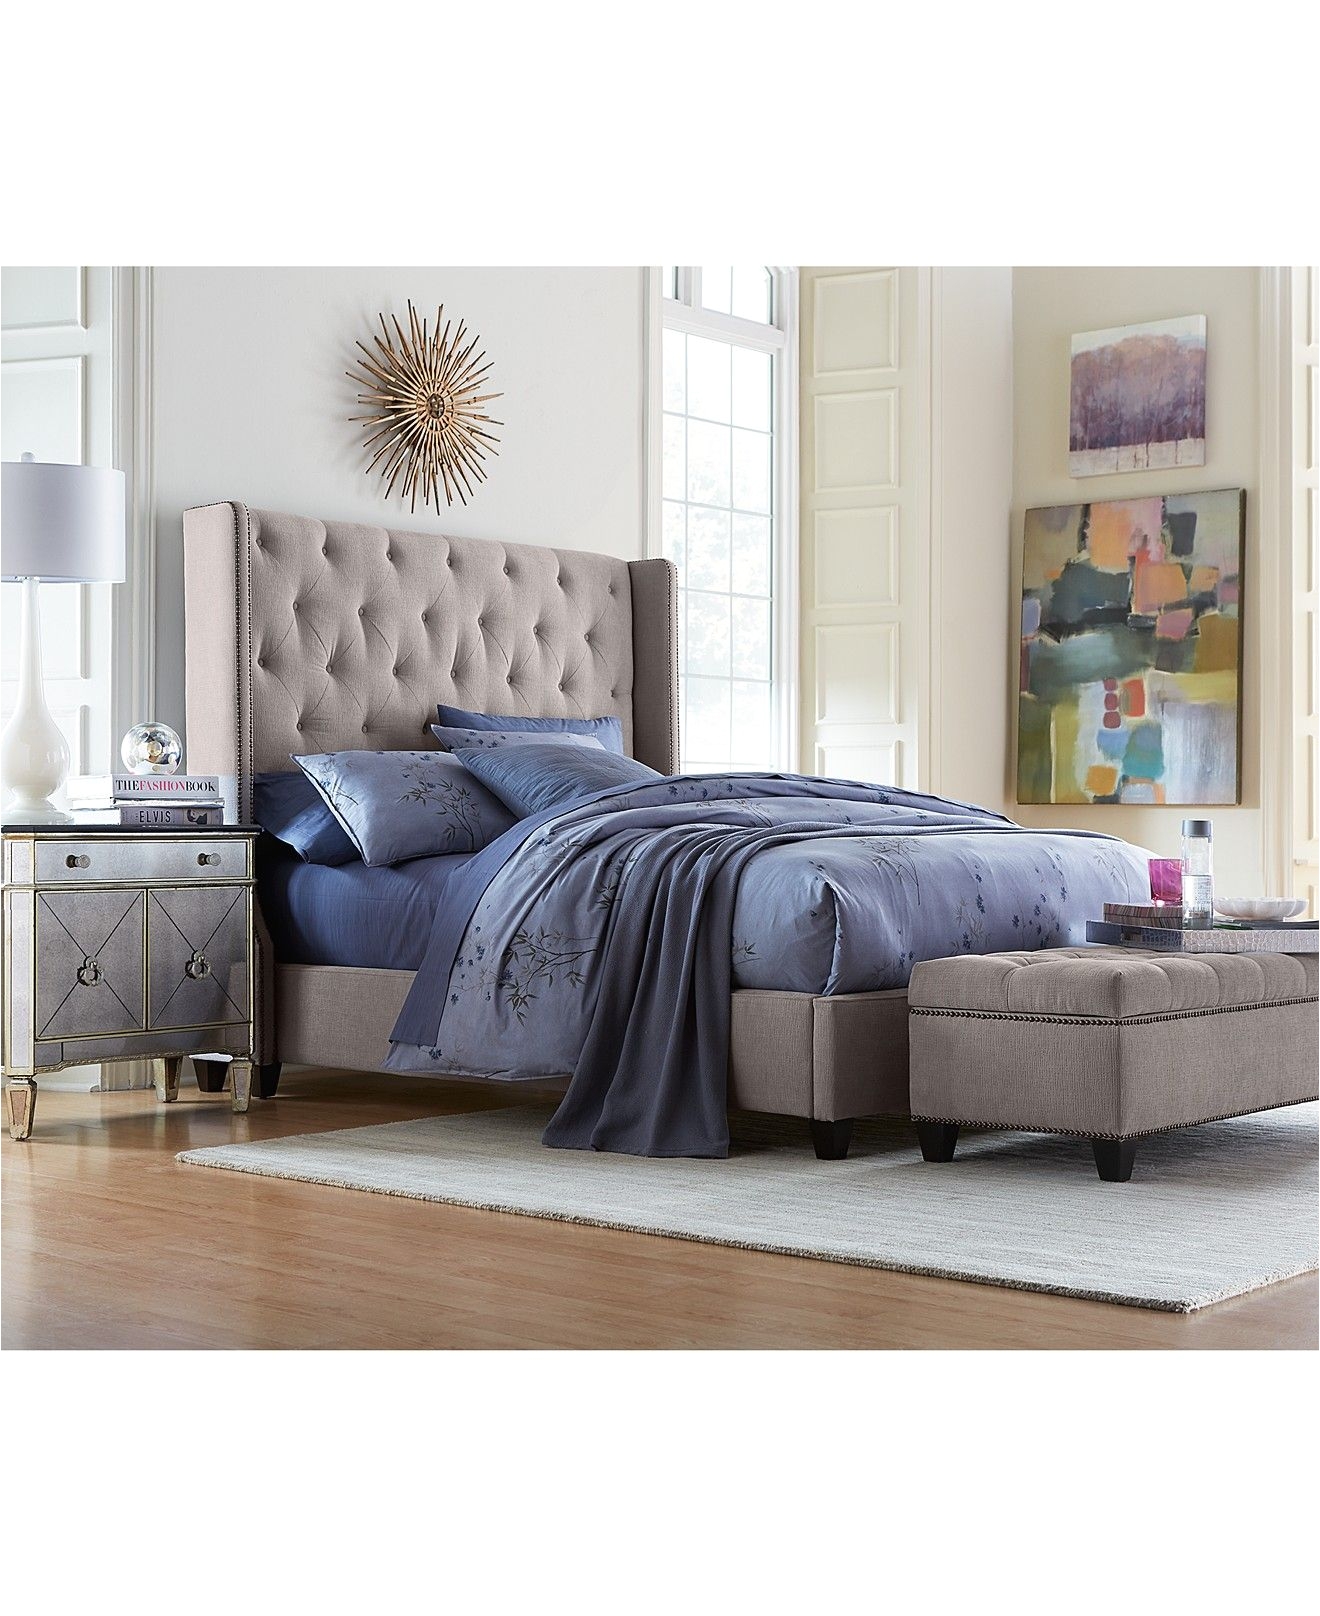 macys beds rosalind upholstered bedroom furniture of macys beds